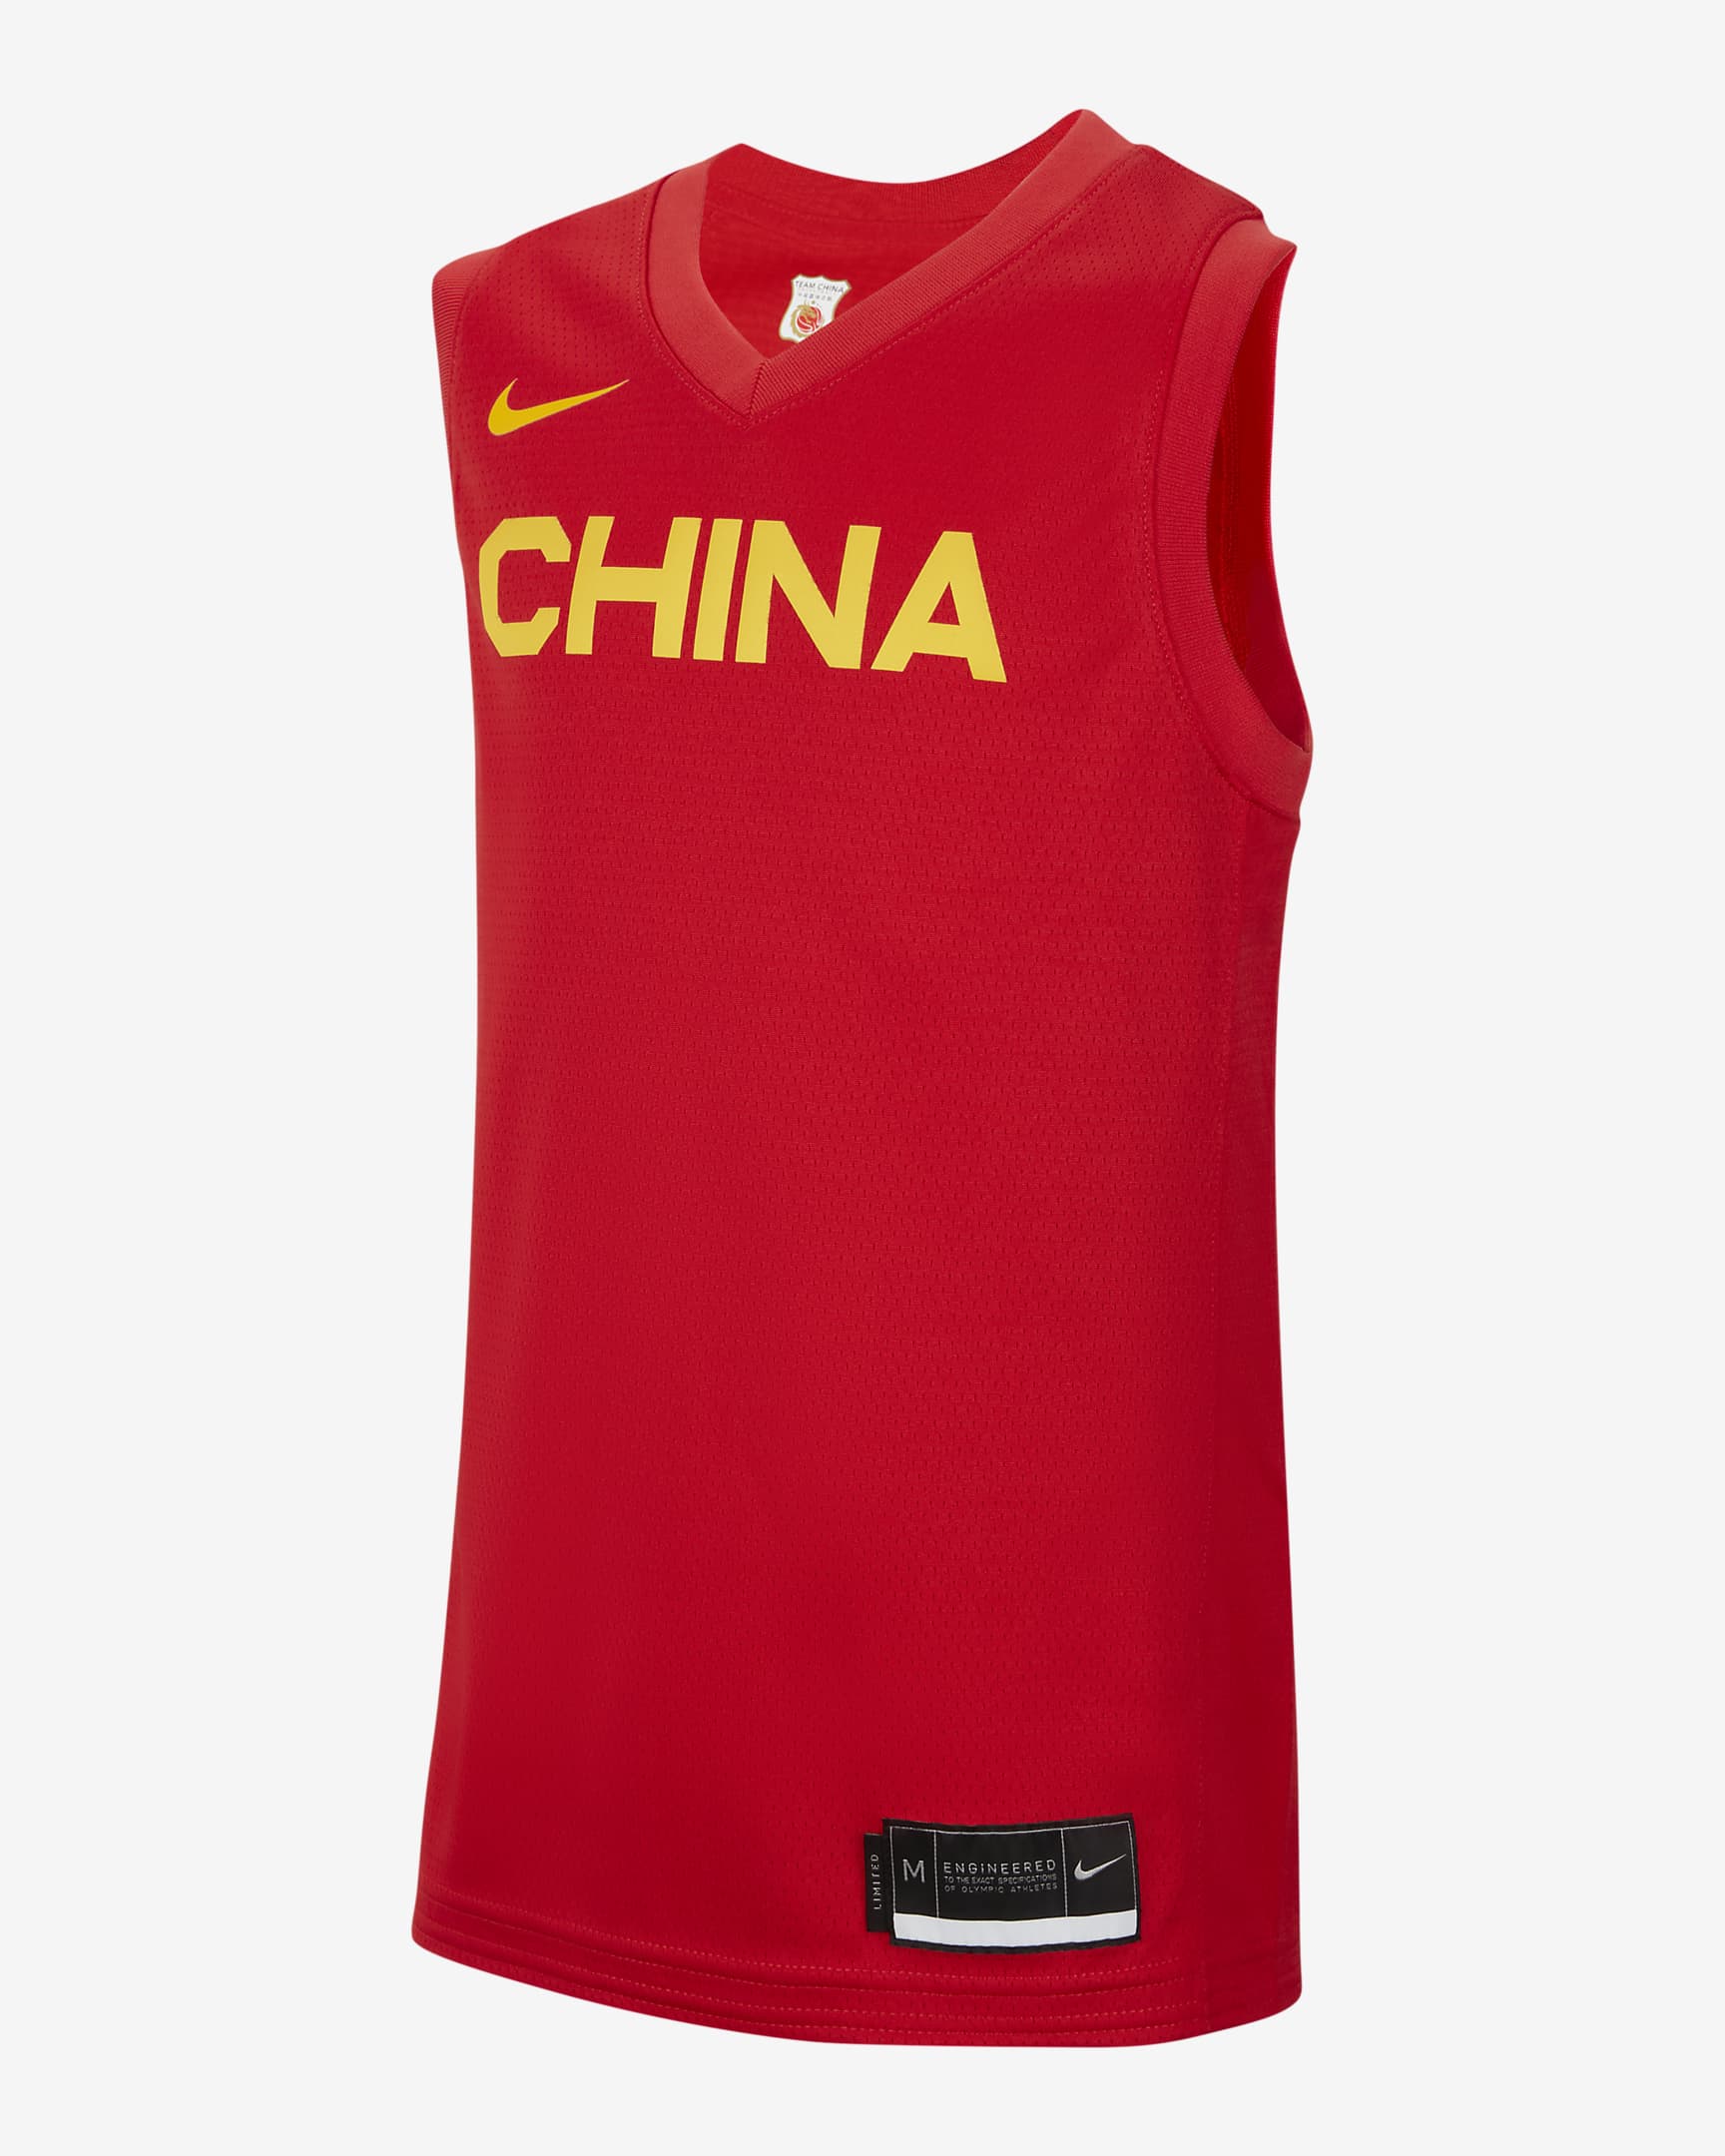 China (Road) Older Kids' Nike Basketball Jersey. Nike UK